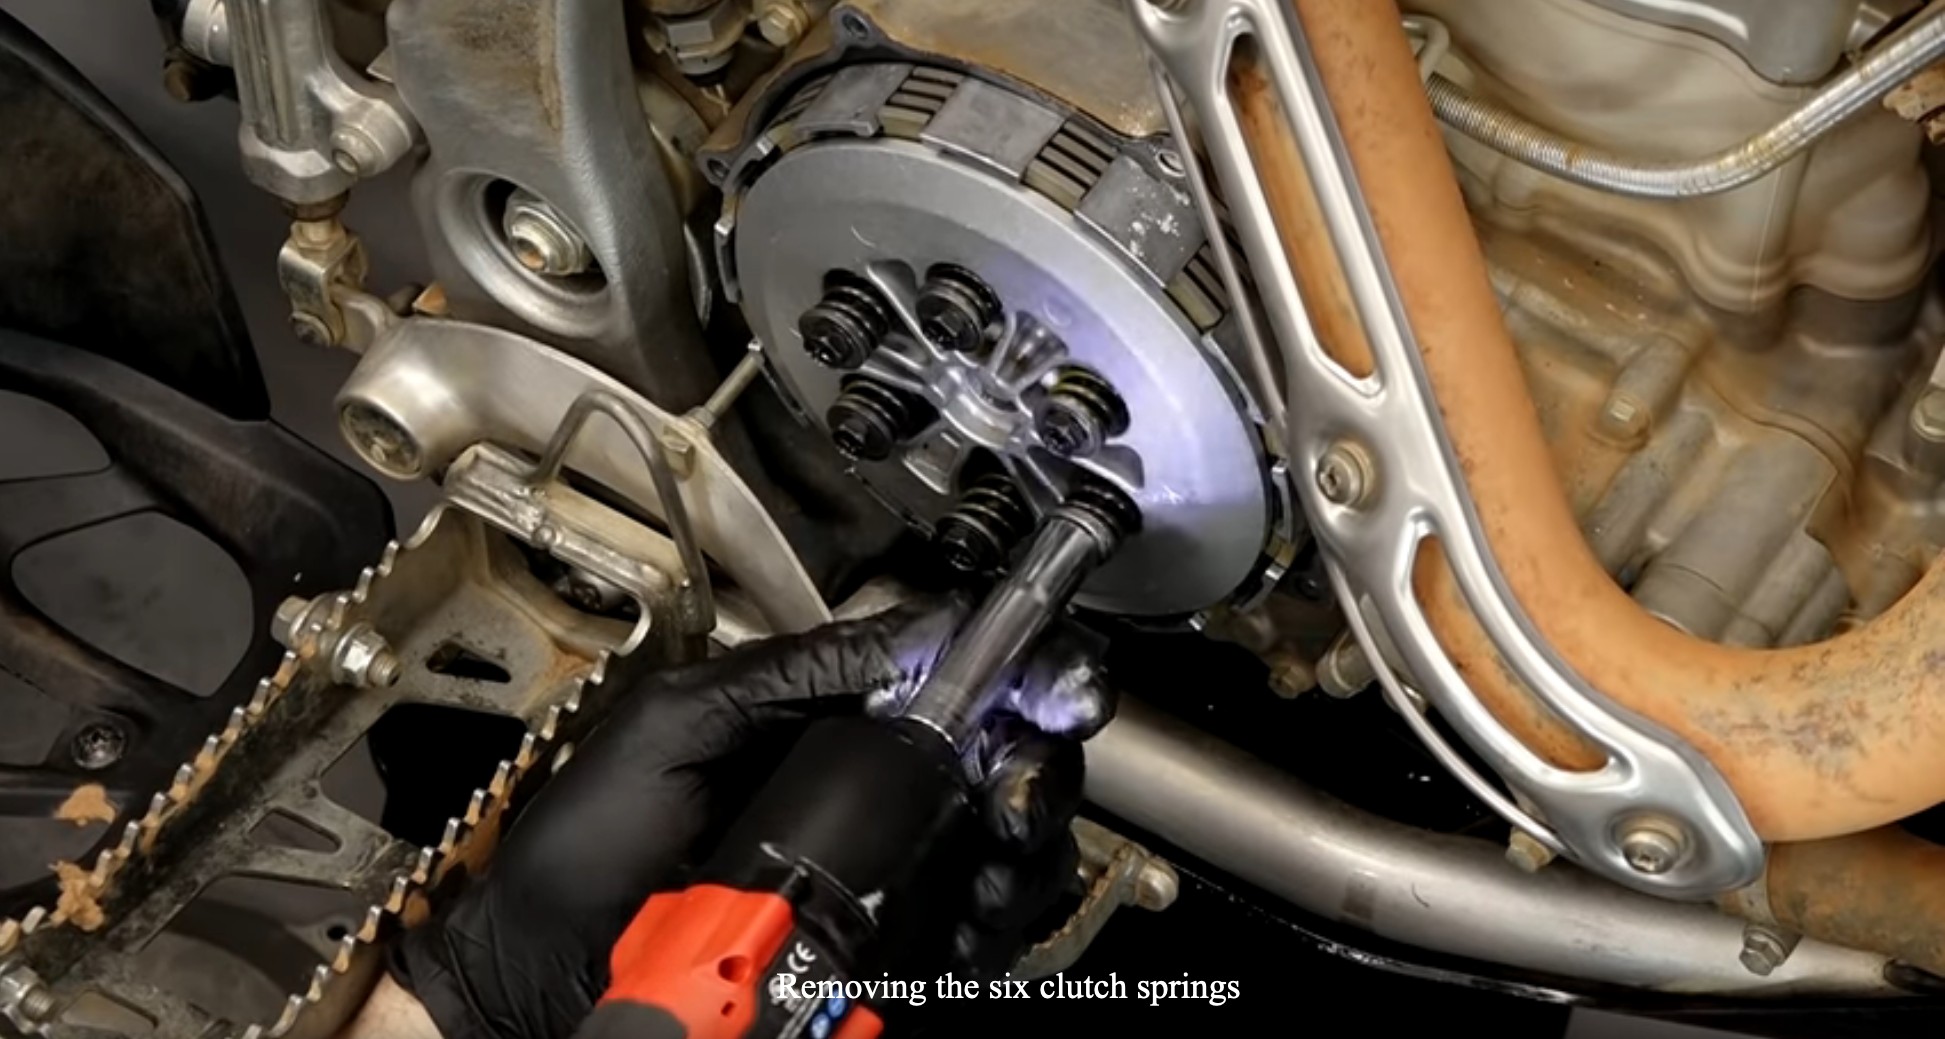 Yamaha YFZ450 clutch spring removal